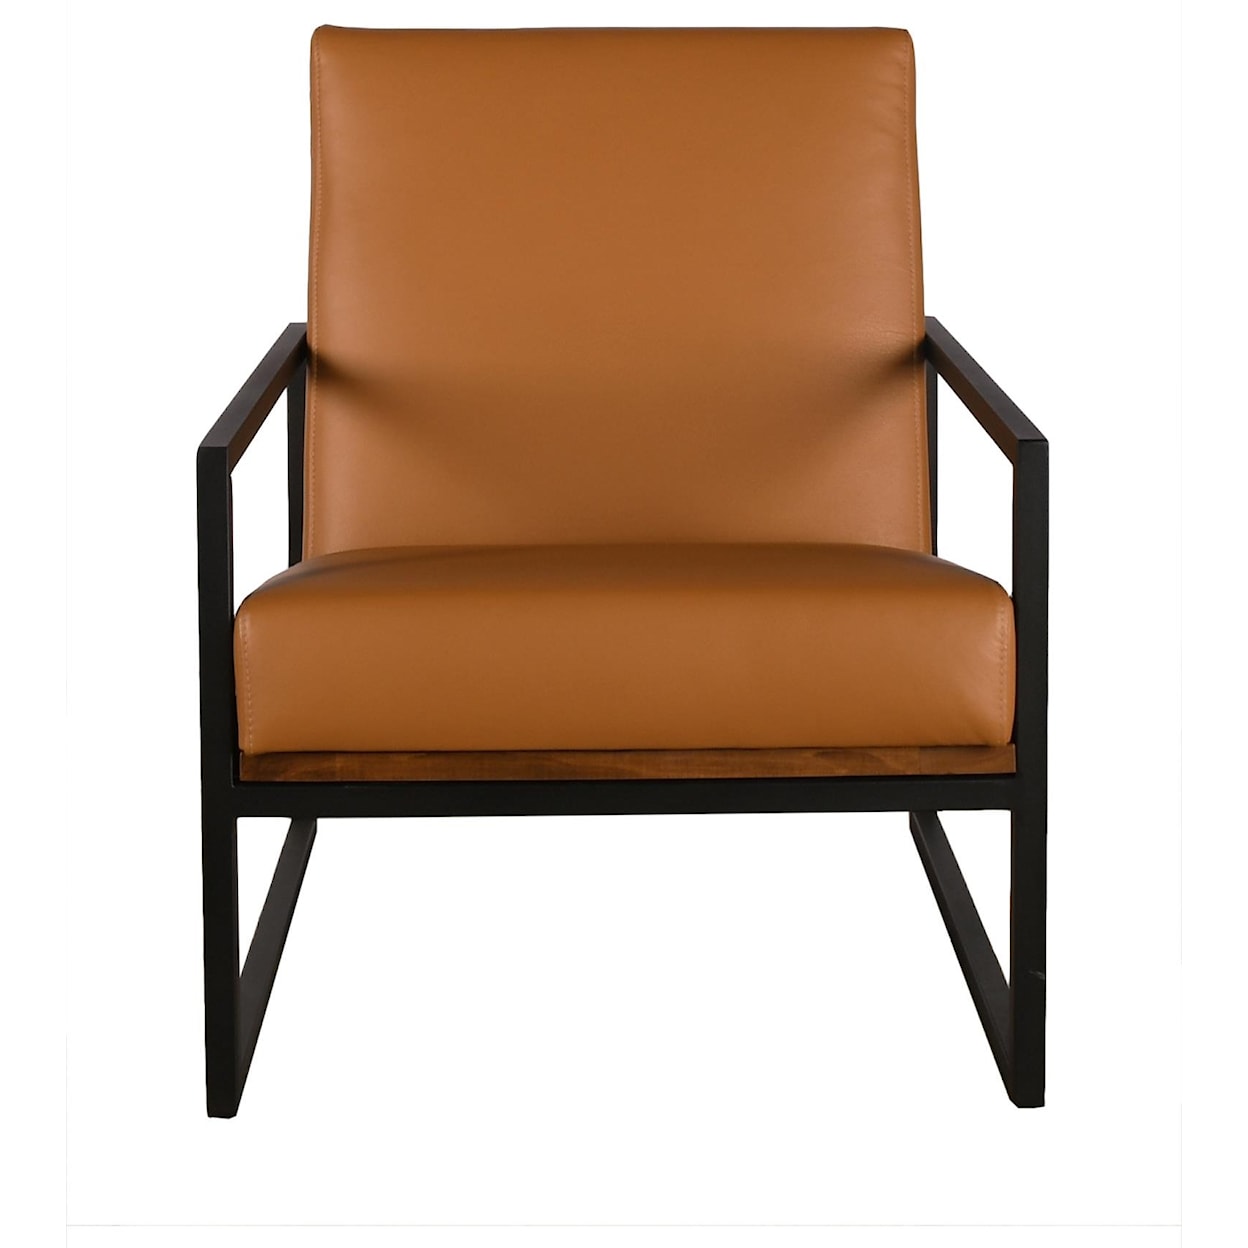 Handstone Muskoka Leather Accent Chair